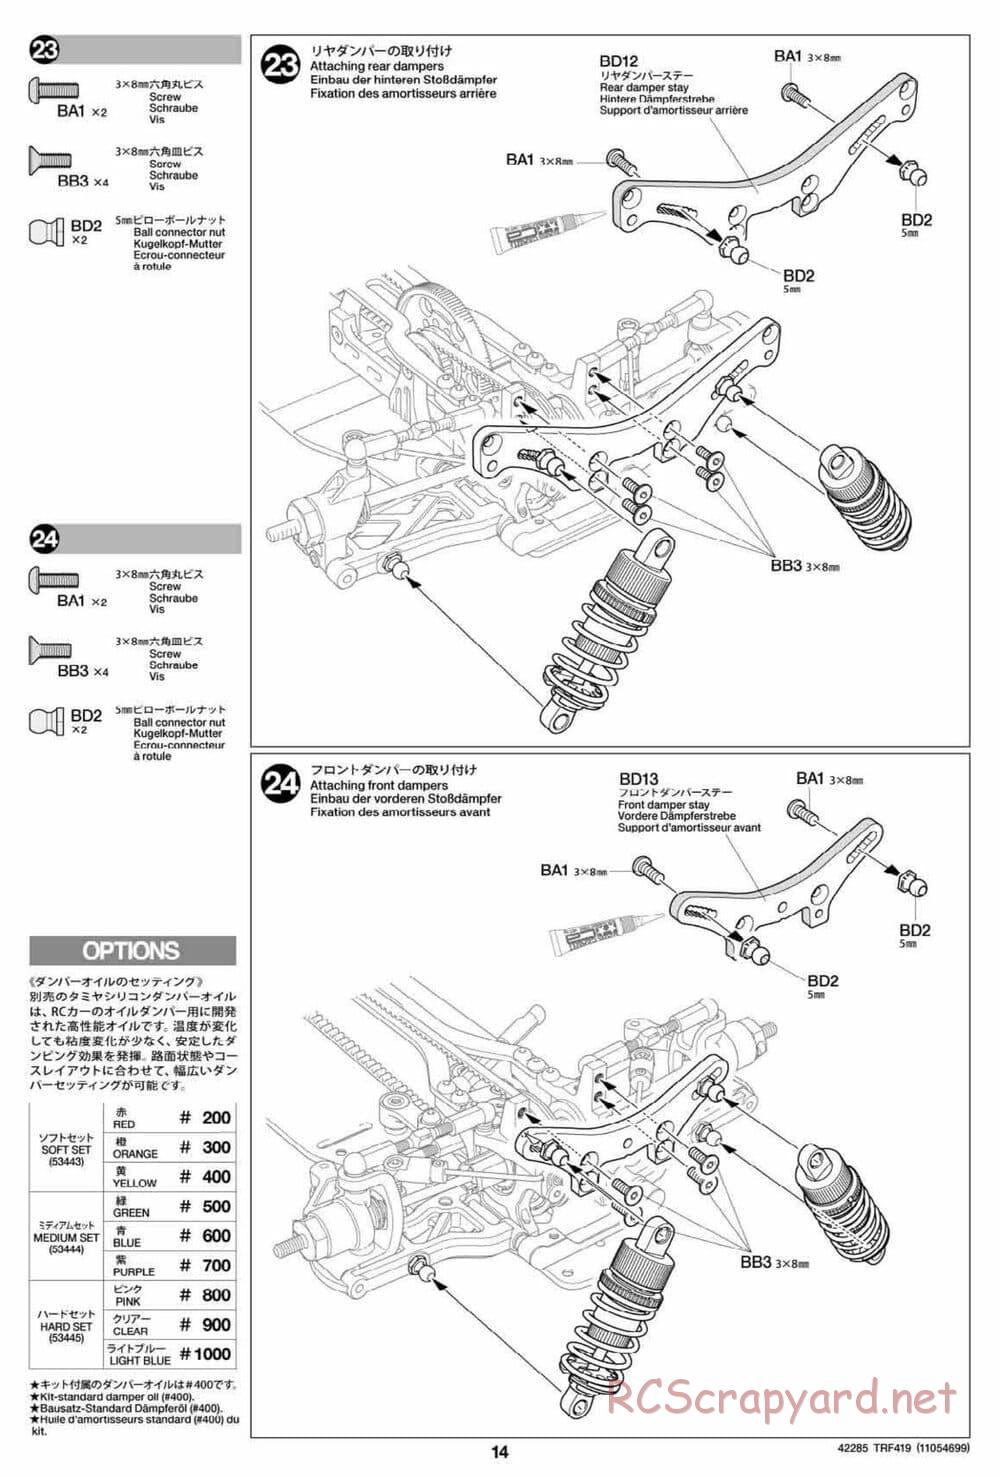 Tamiya - TRF419 Chassis - Manual - Page 14